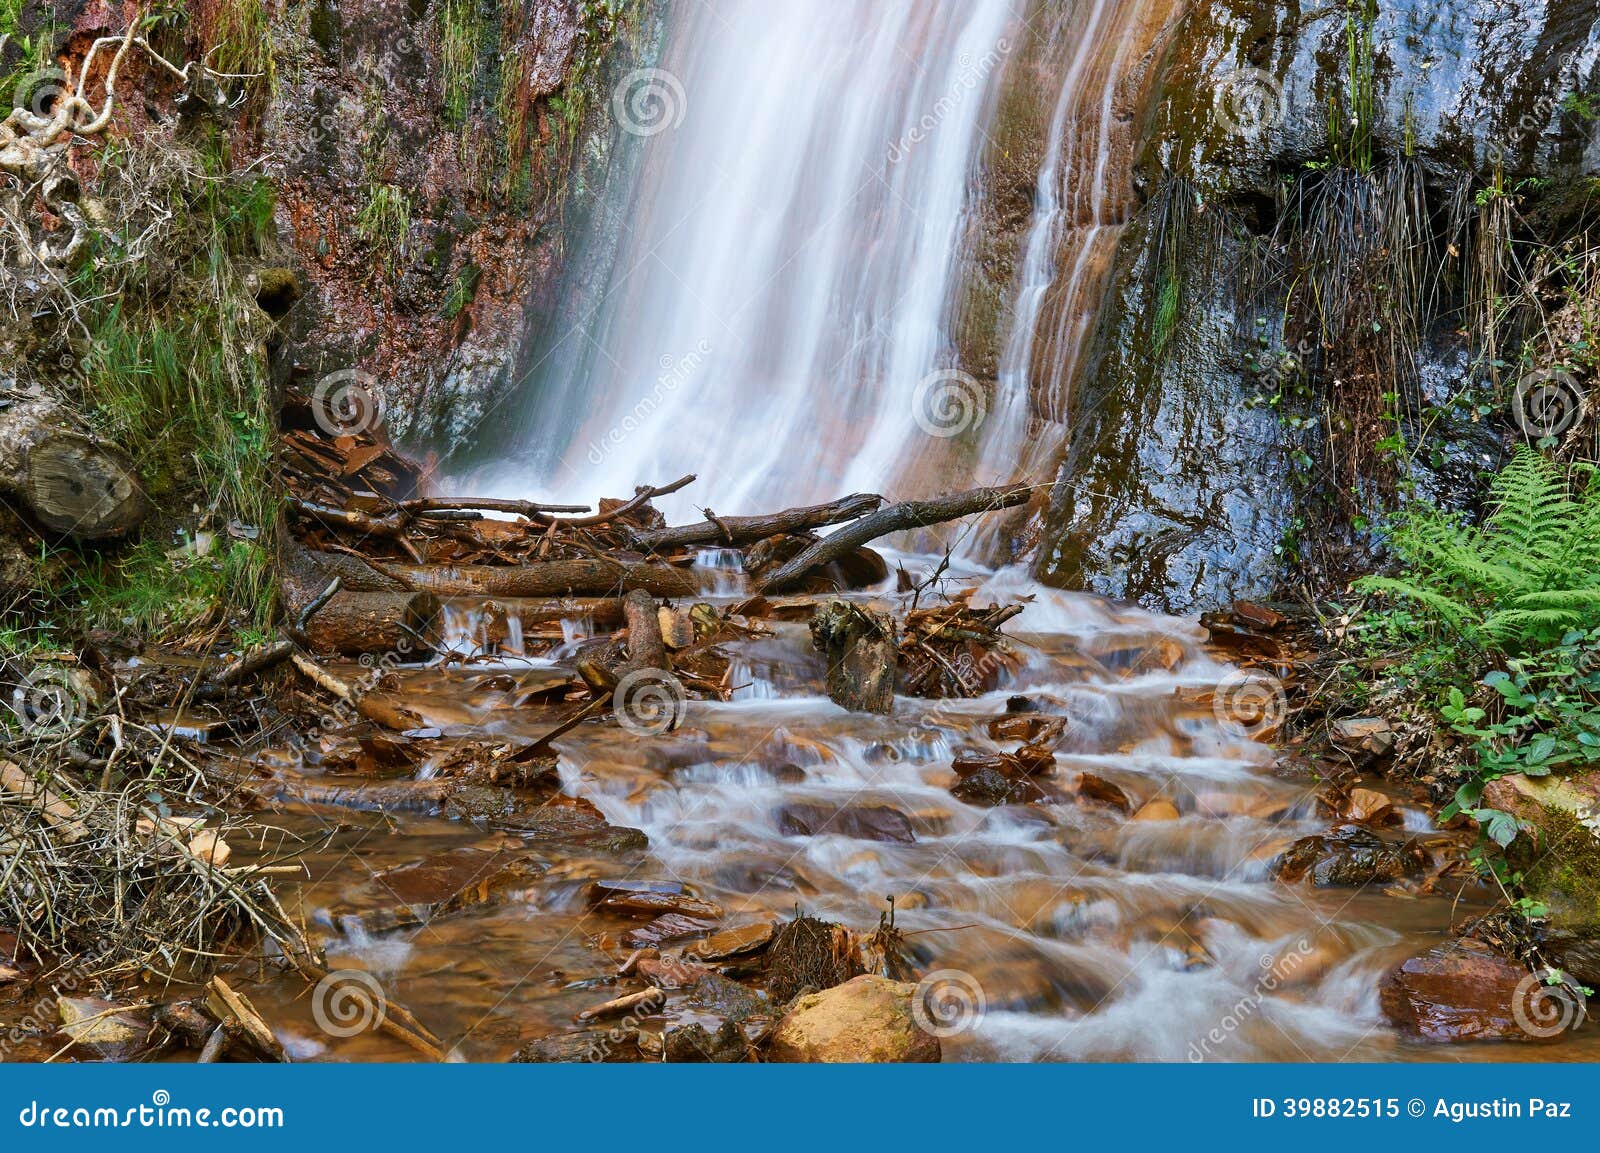 rexio waterfall in folgoso do courel (or caurel), lugo, spain